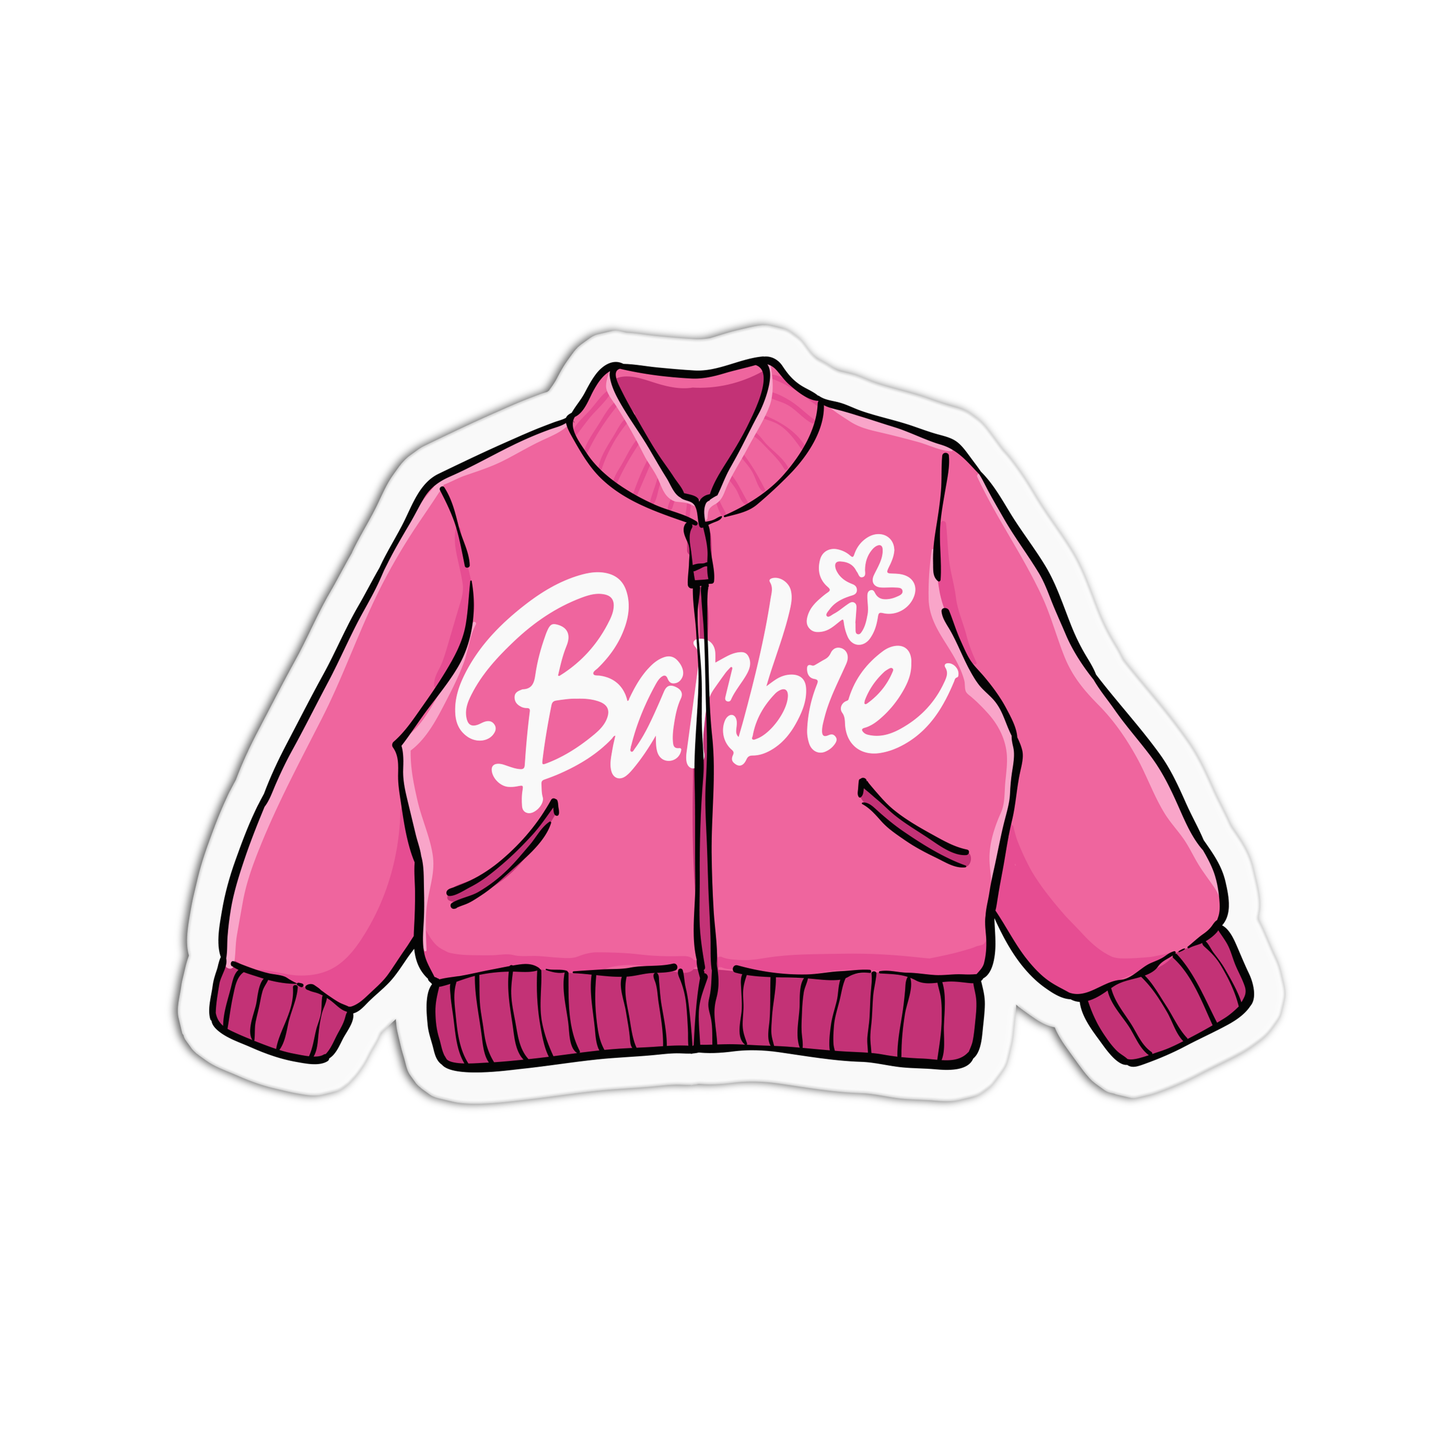 Barbie Jacket Sticker